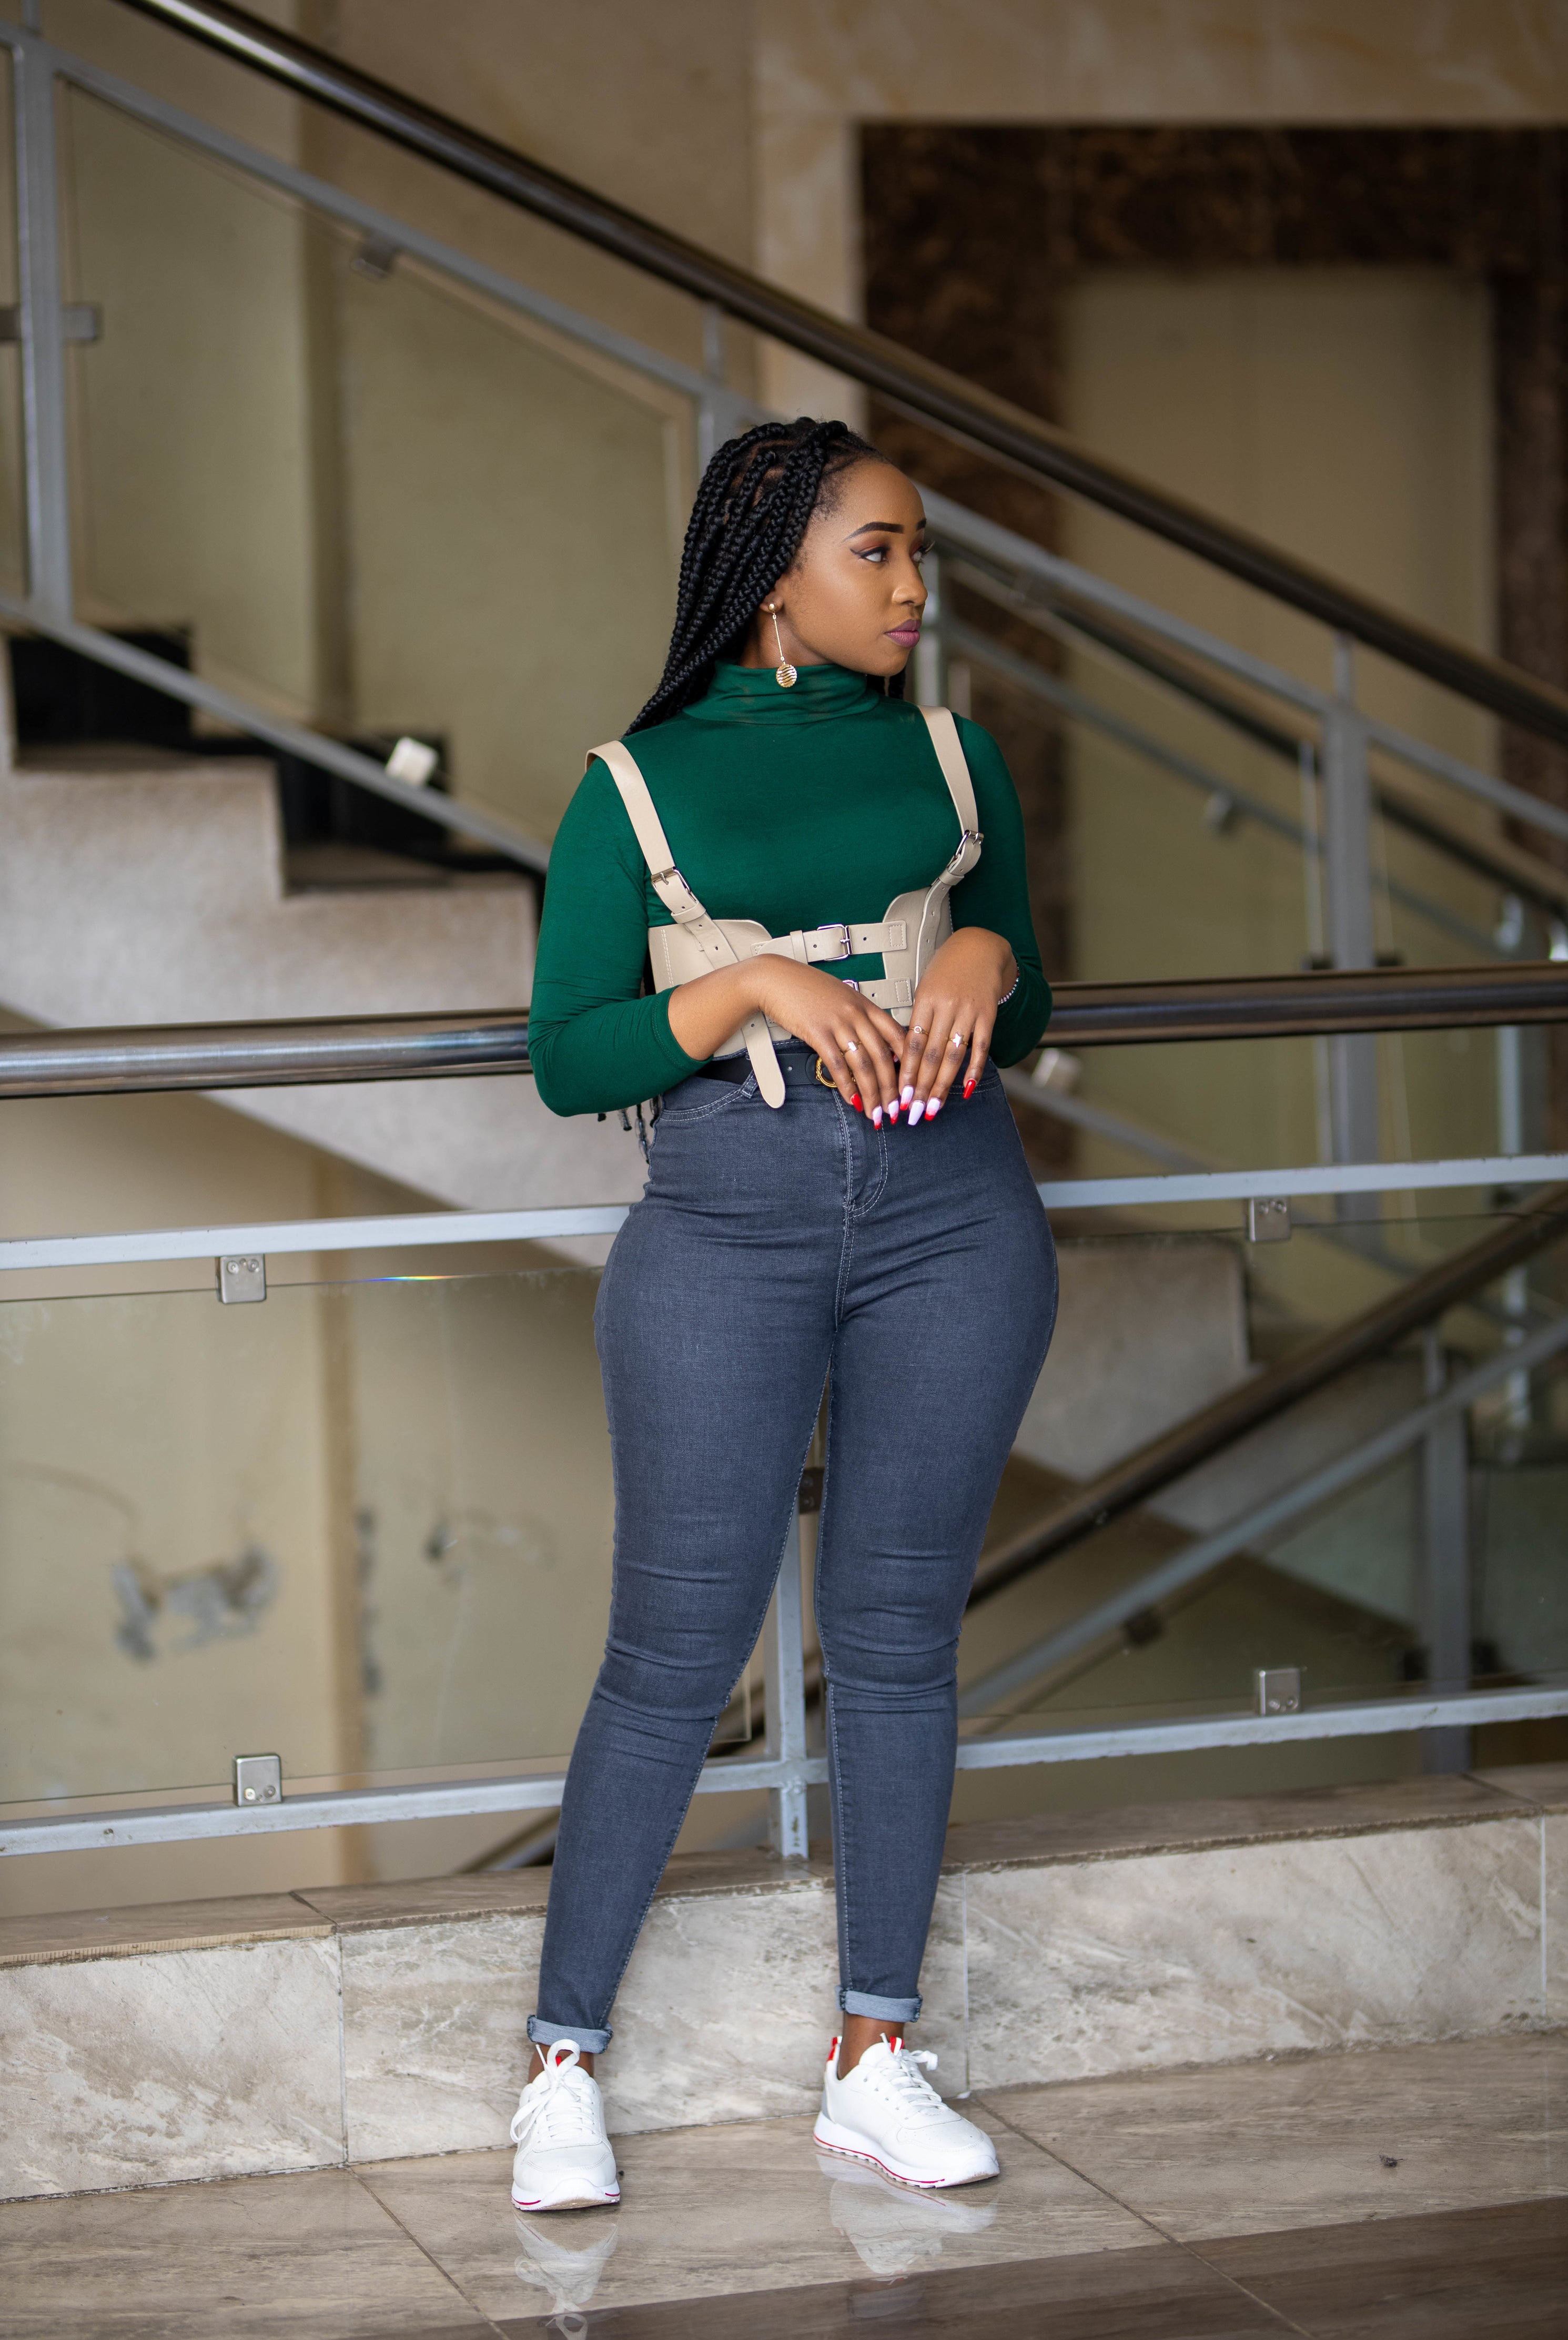 Quality Designer Side Pocket Denim Jeans in Nairobi Central - Clothing,  Stylish Sisters